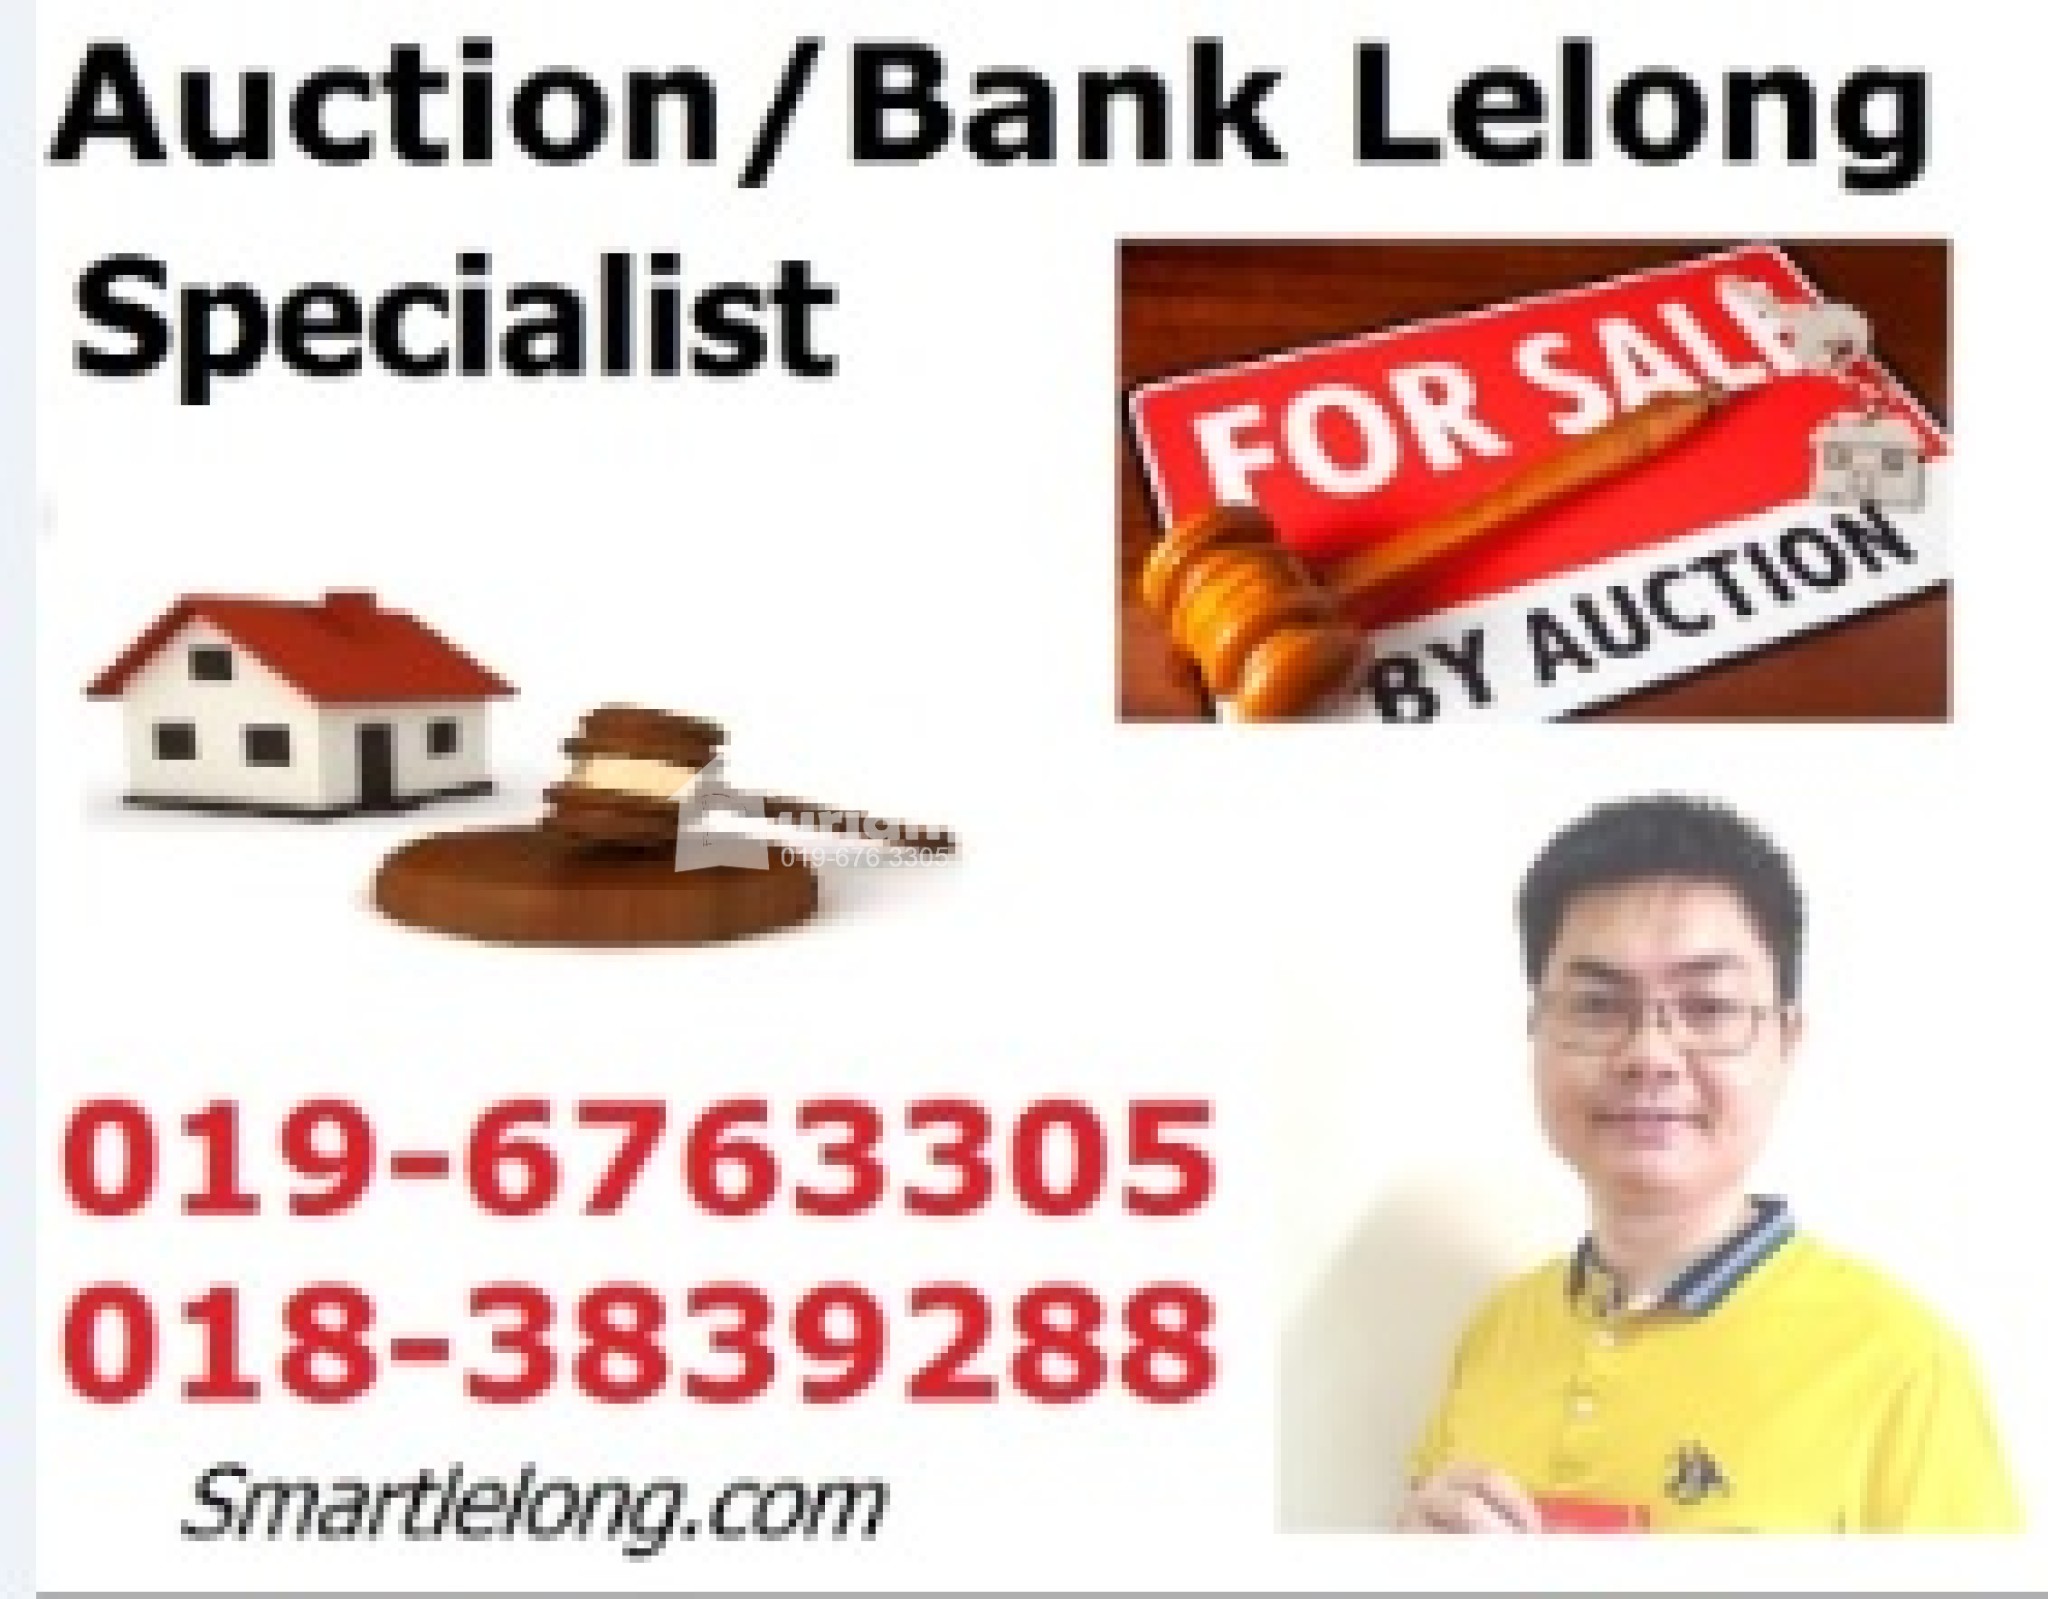 Terrace House For Auction at Taman Puncak Jalil